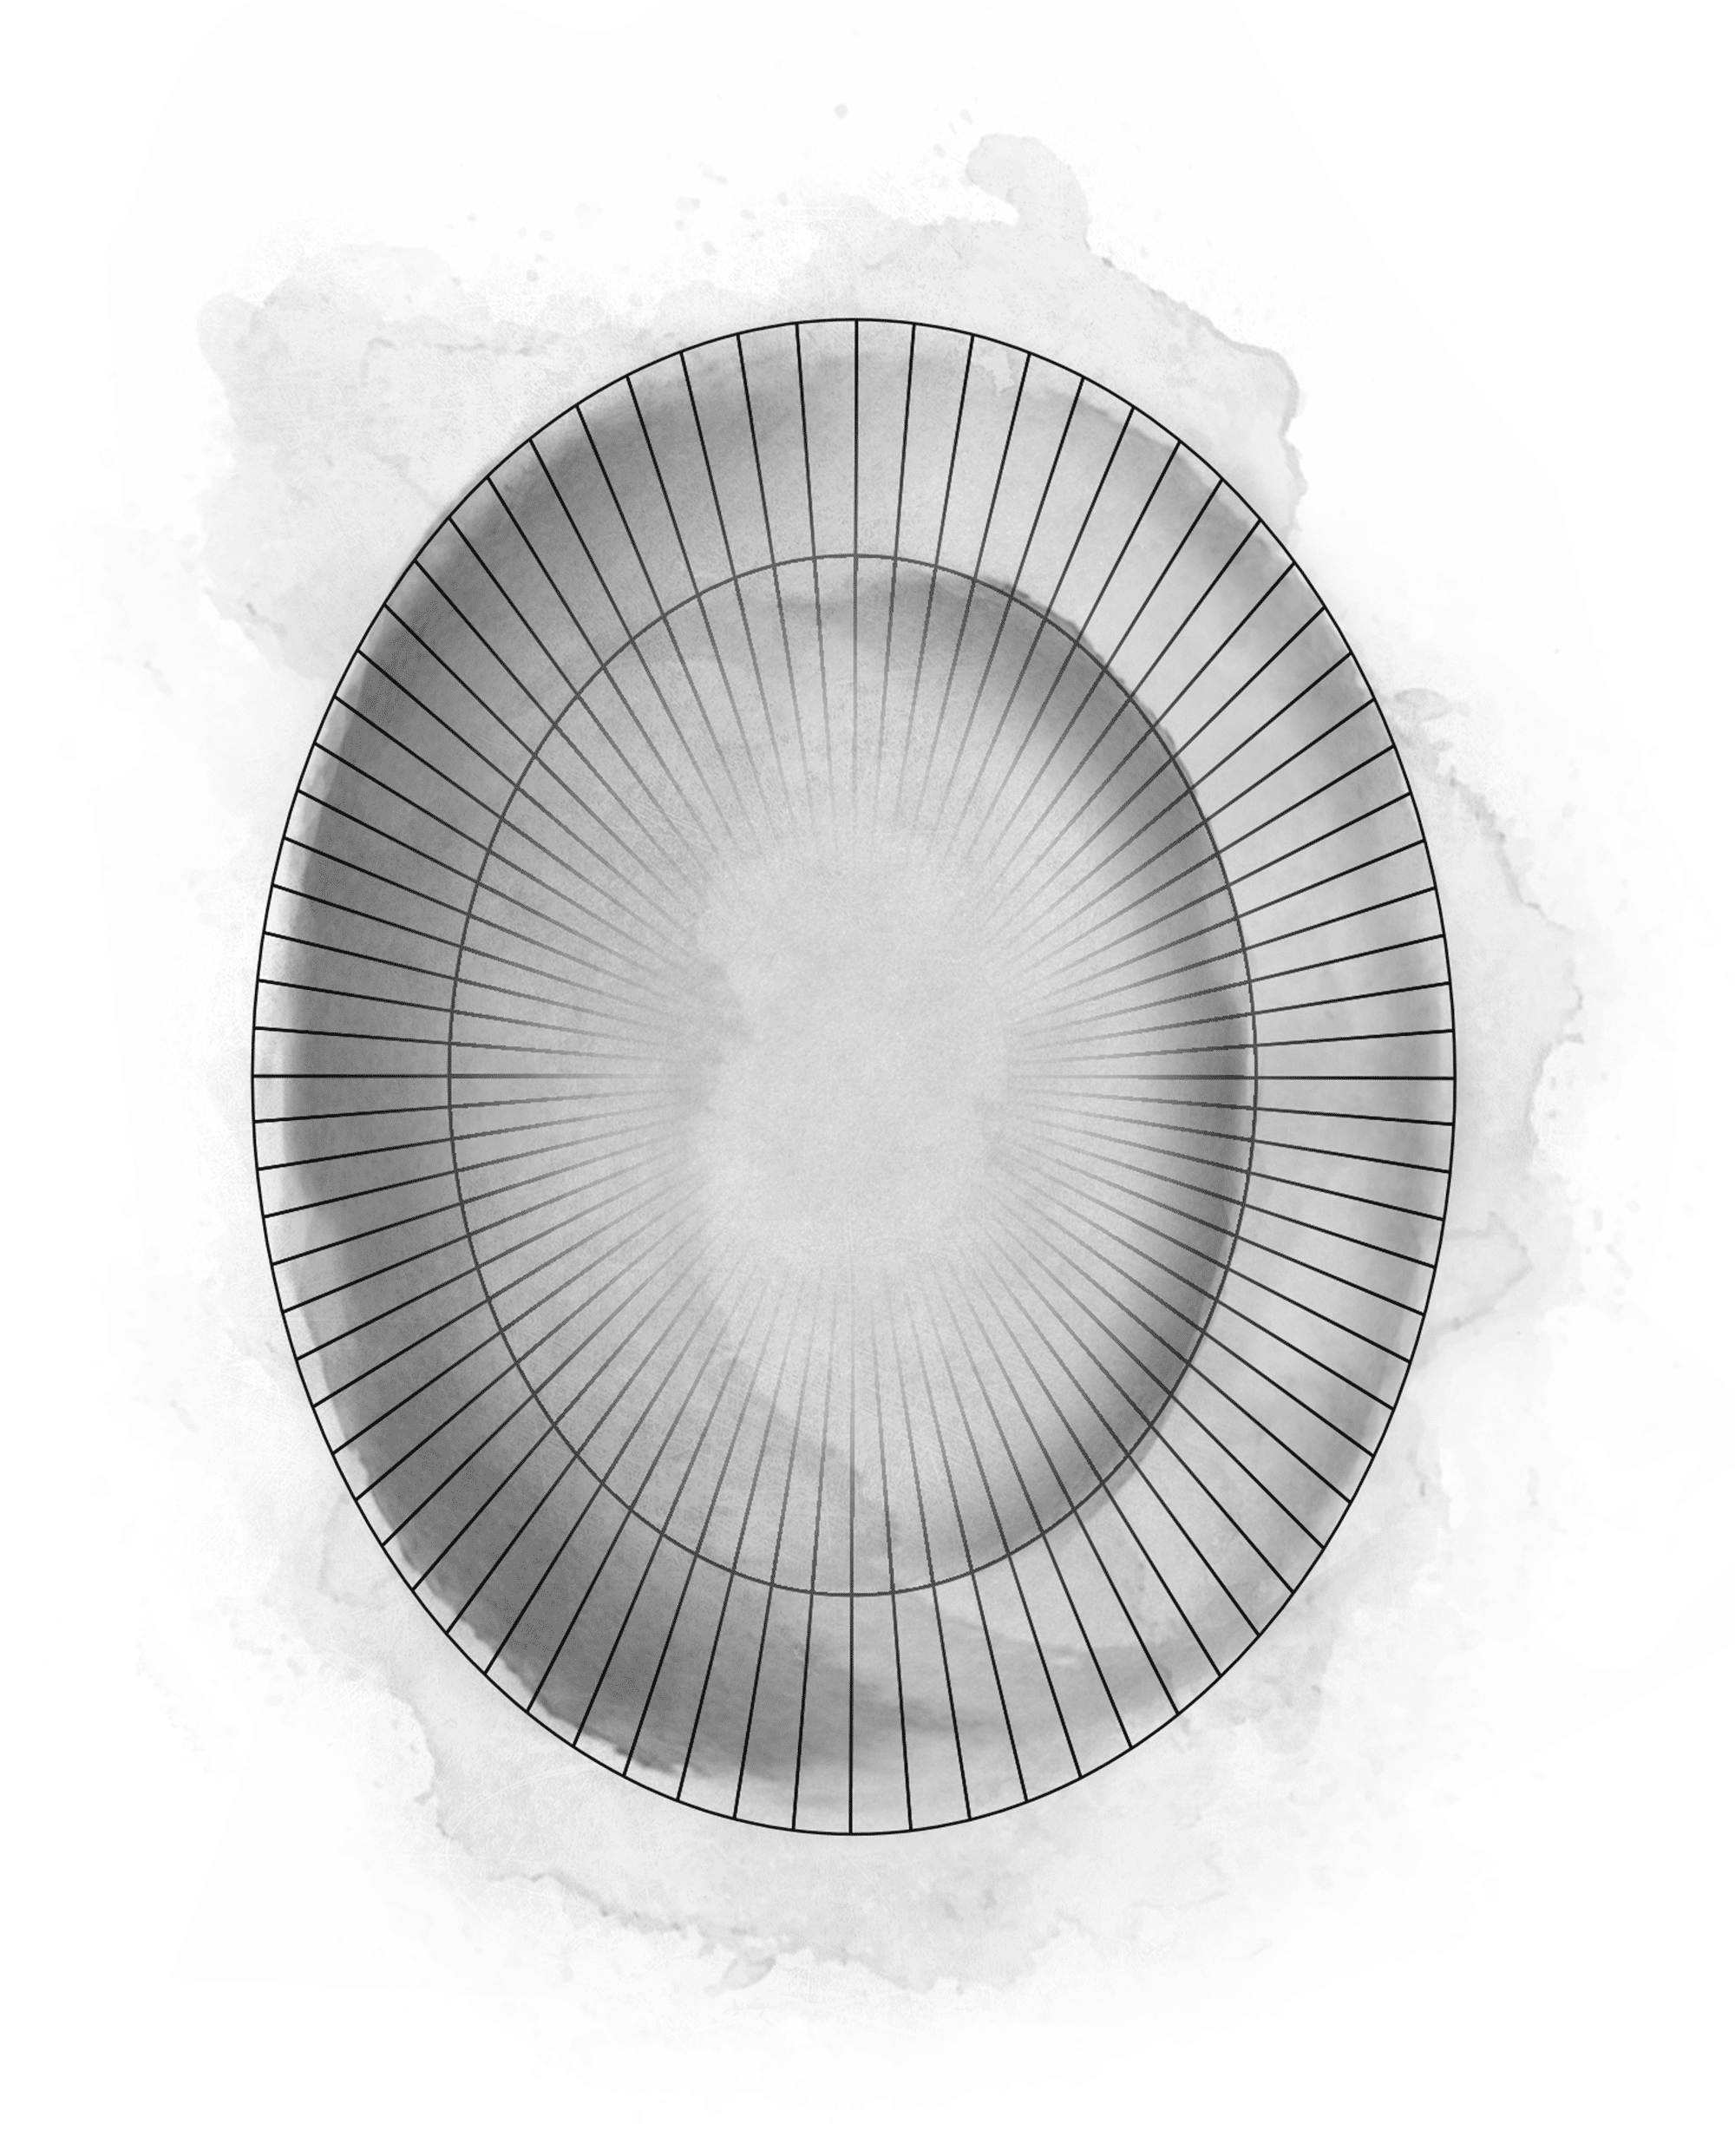 Ovalt bordfad 28.5x22.5 cm